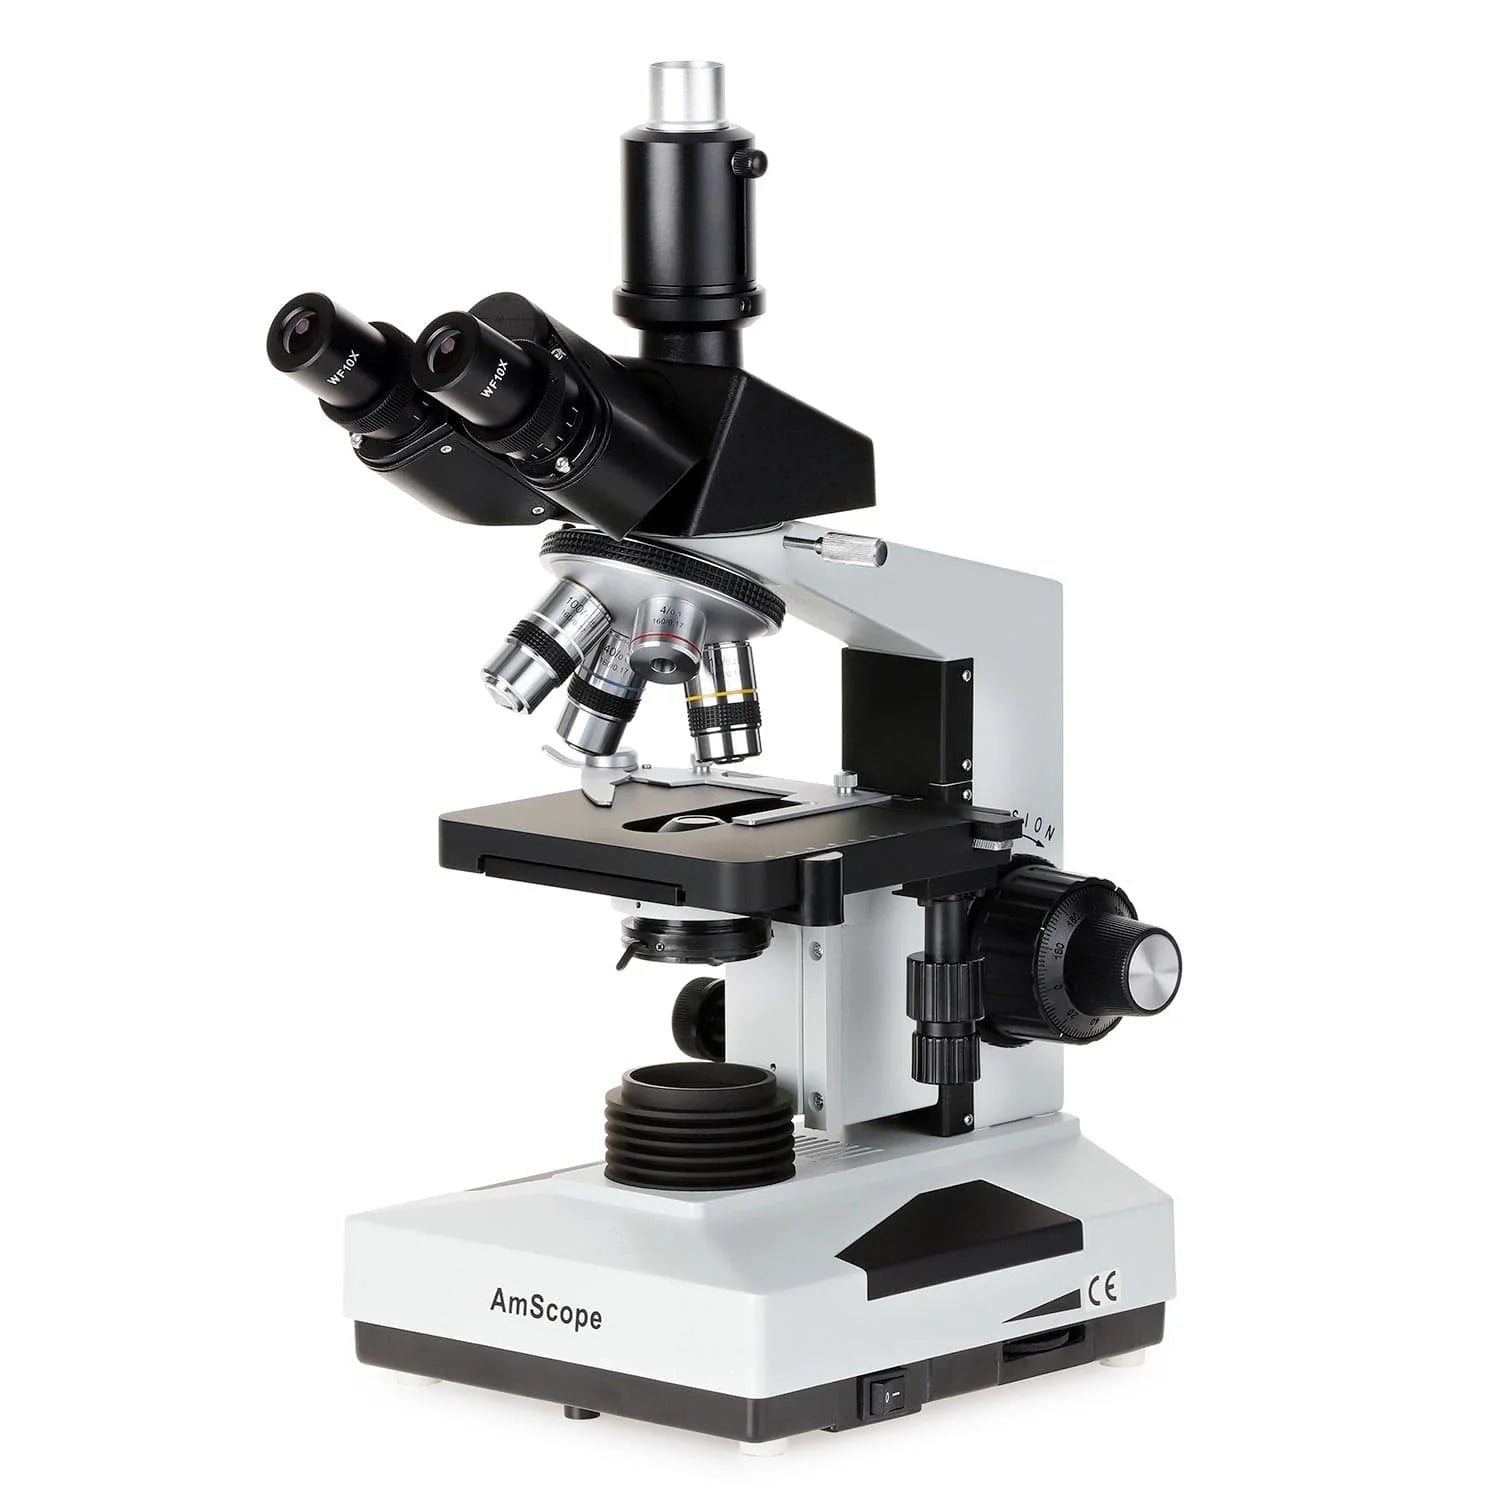 AmScope Trinocular Compound Microscope Up to 40X-2500X with Digital Camera